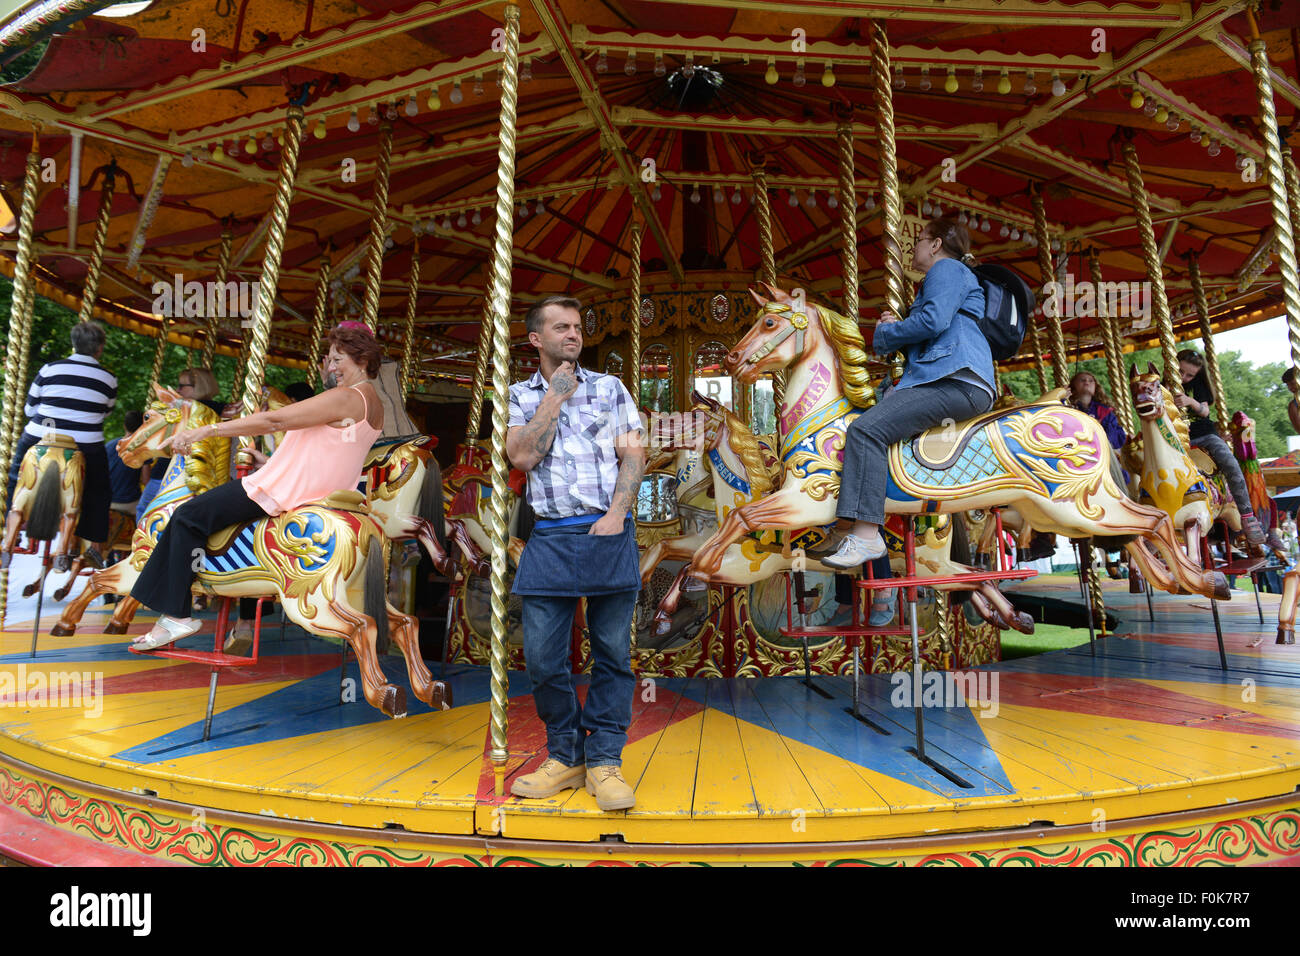 Traditional British merry go round fairground carousel ride Stock Photo